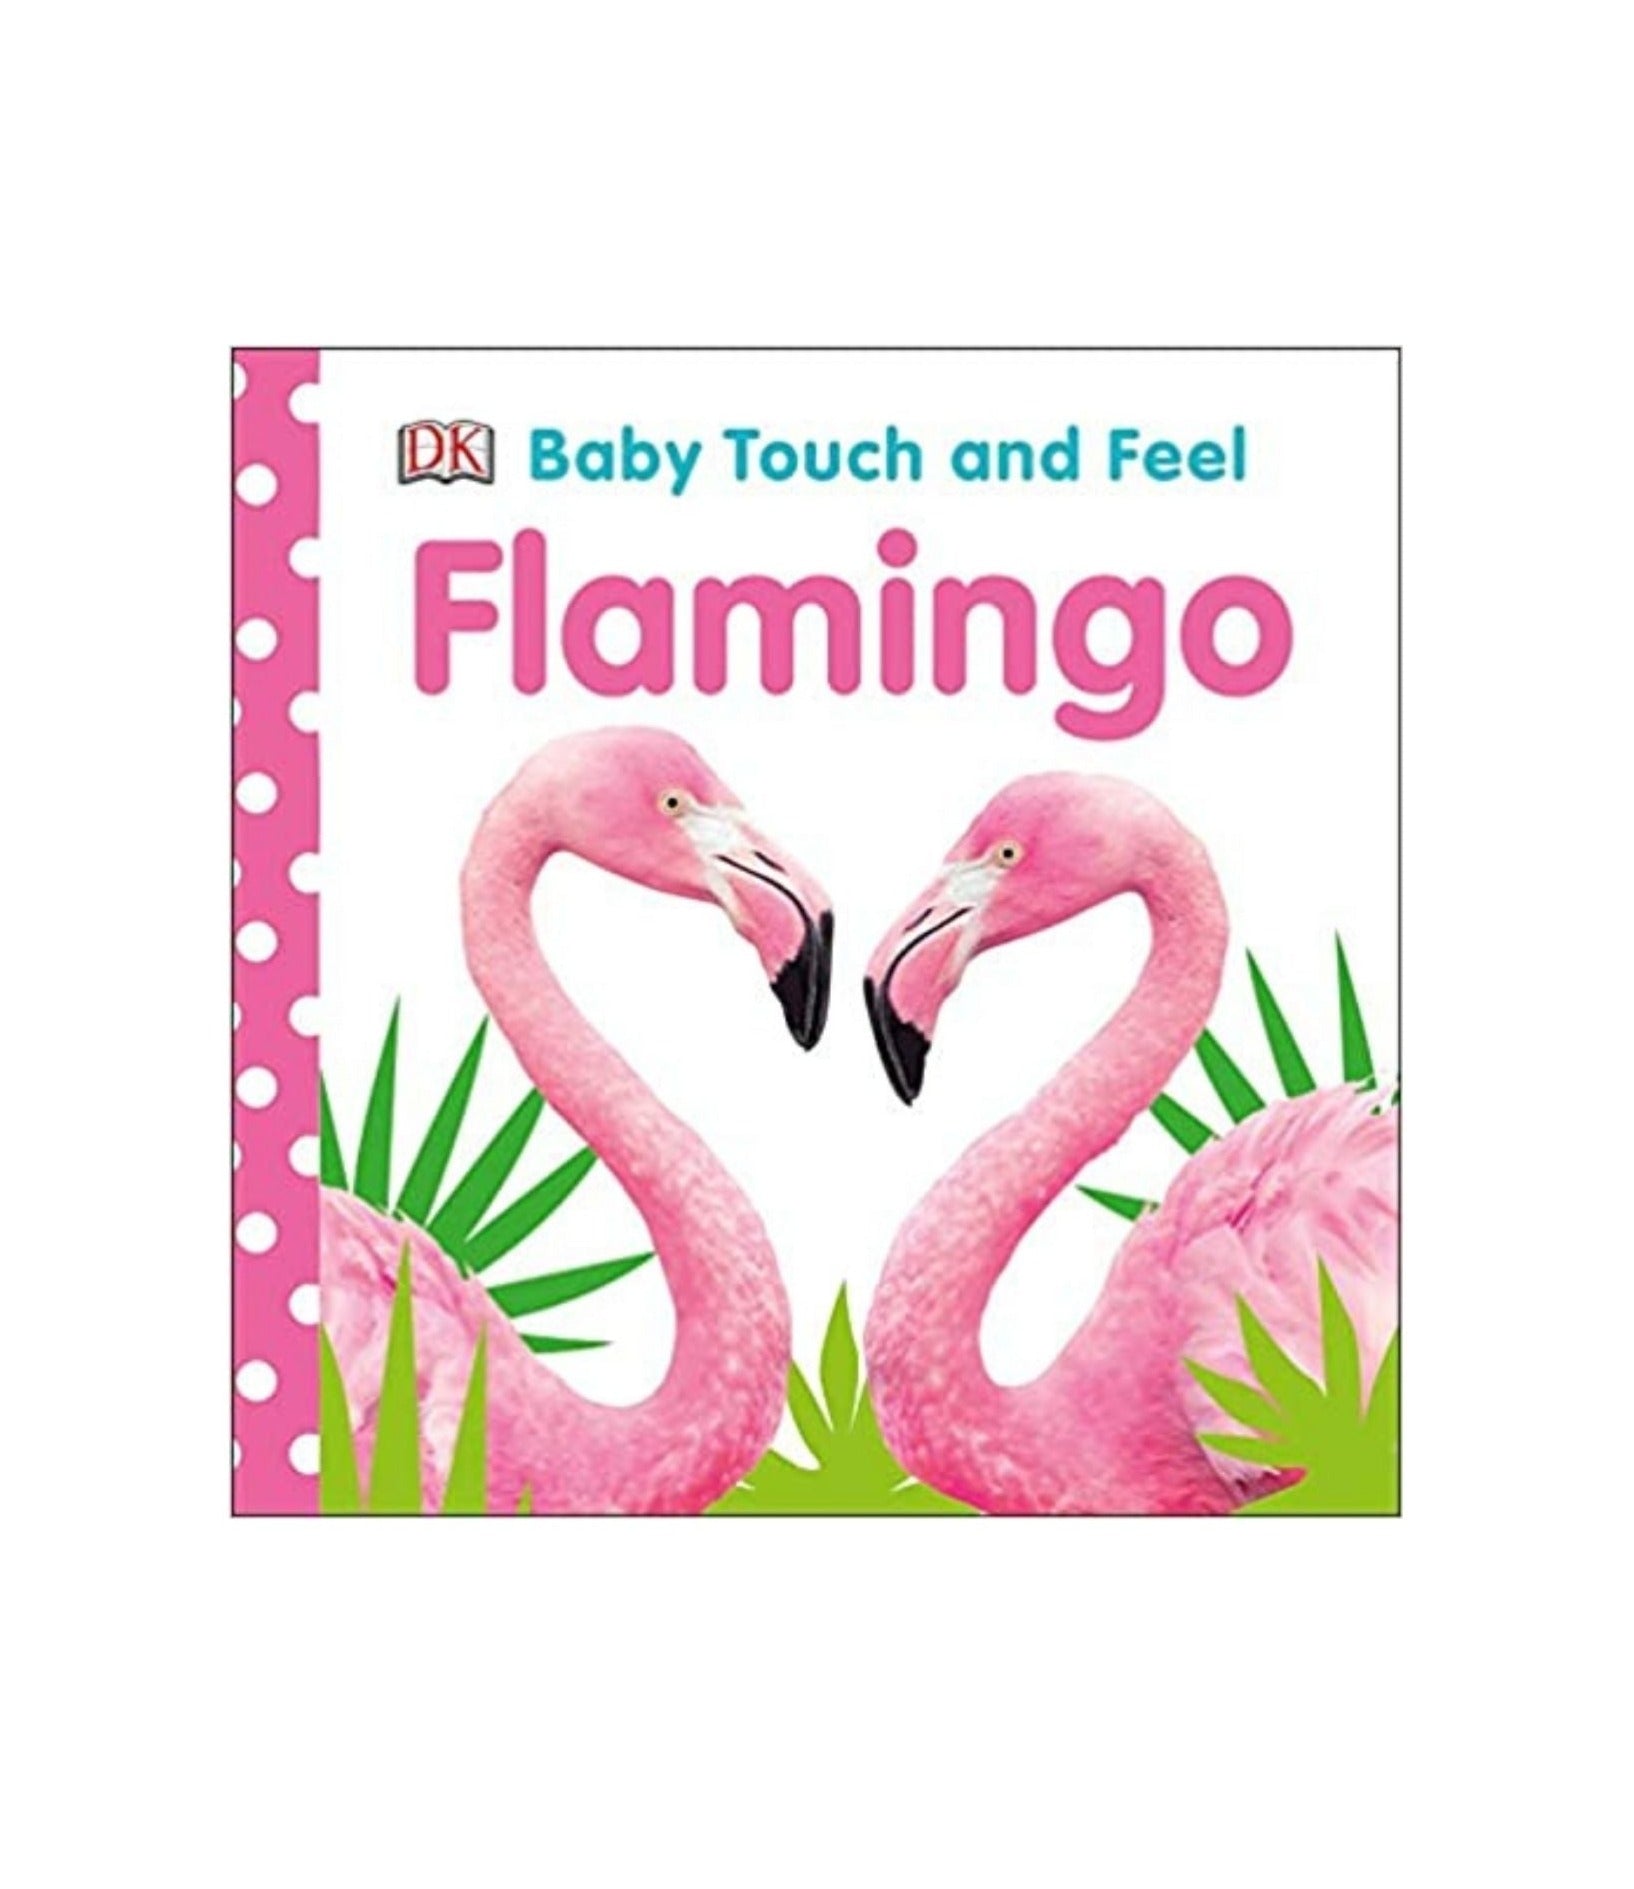 book cover shows 2 pink flamingos